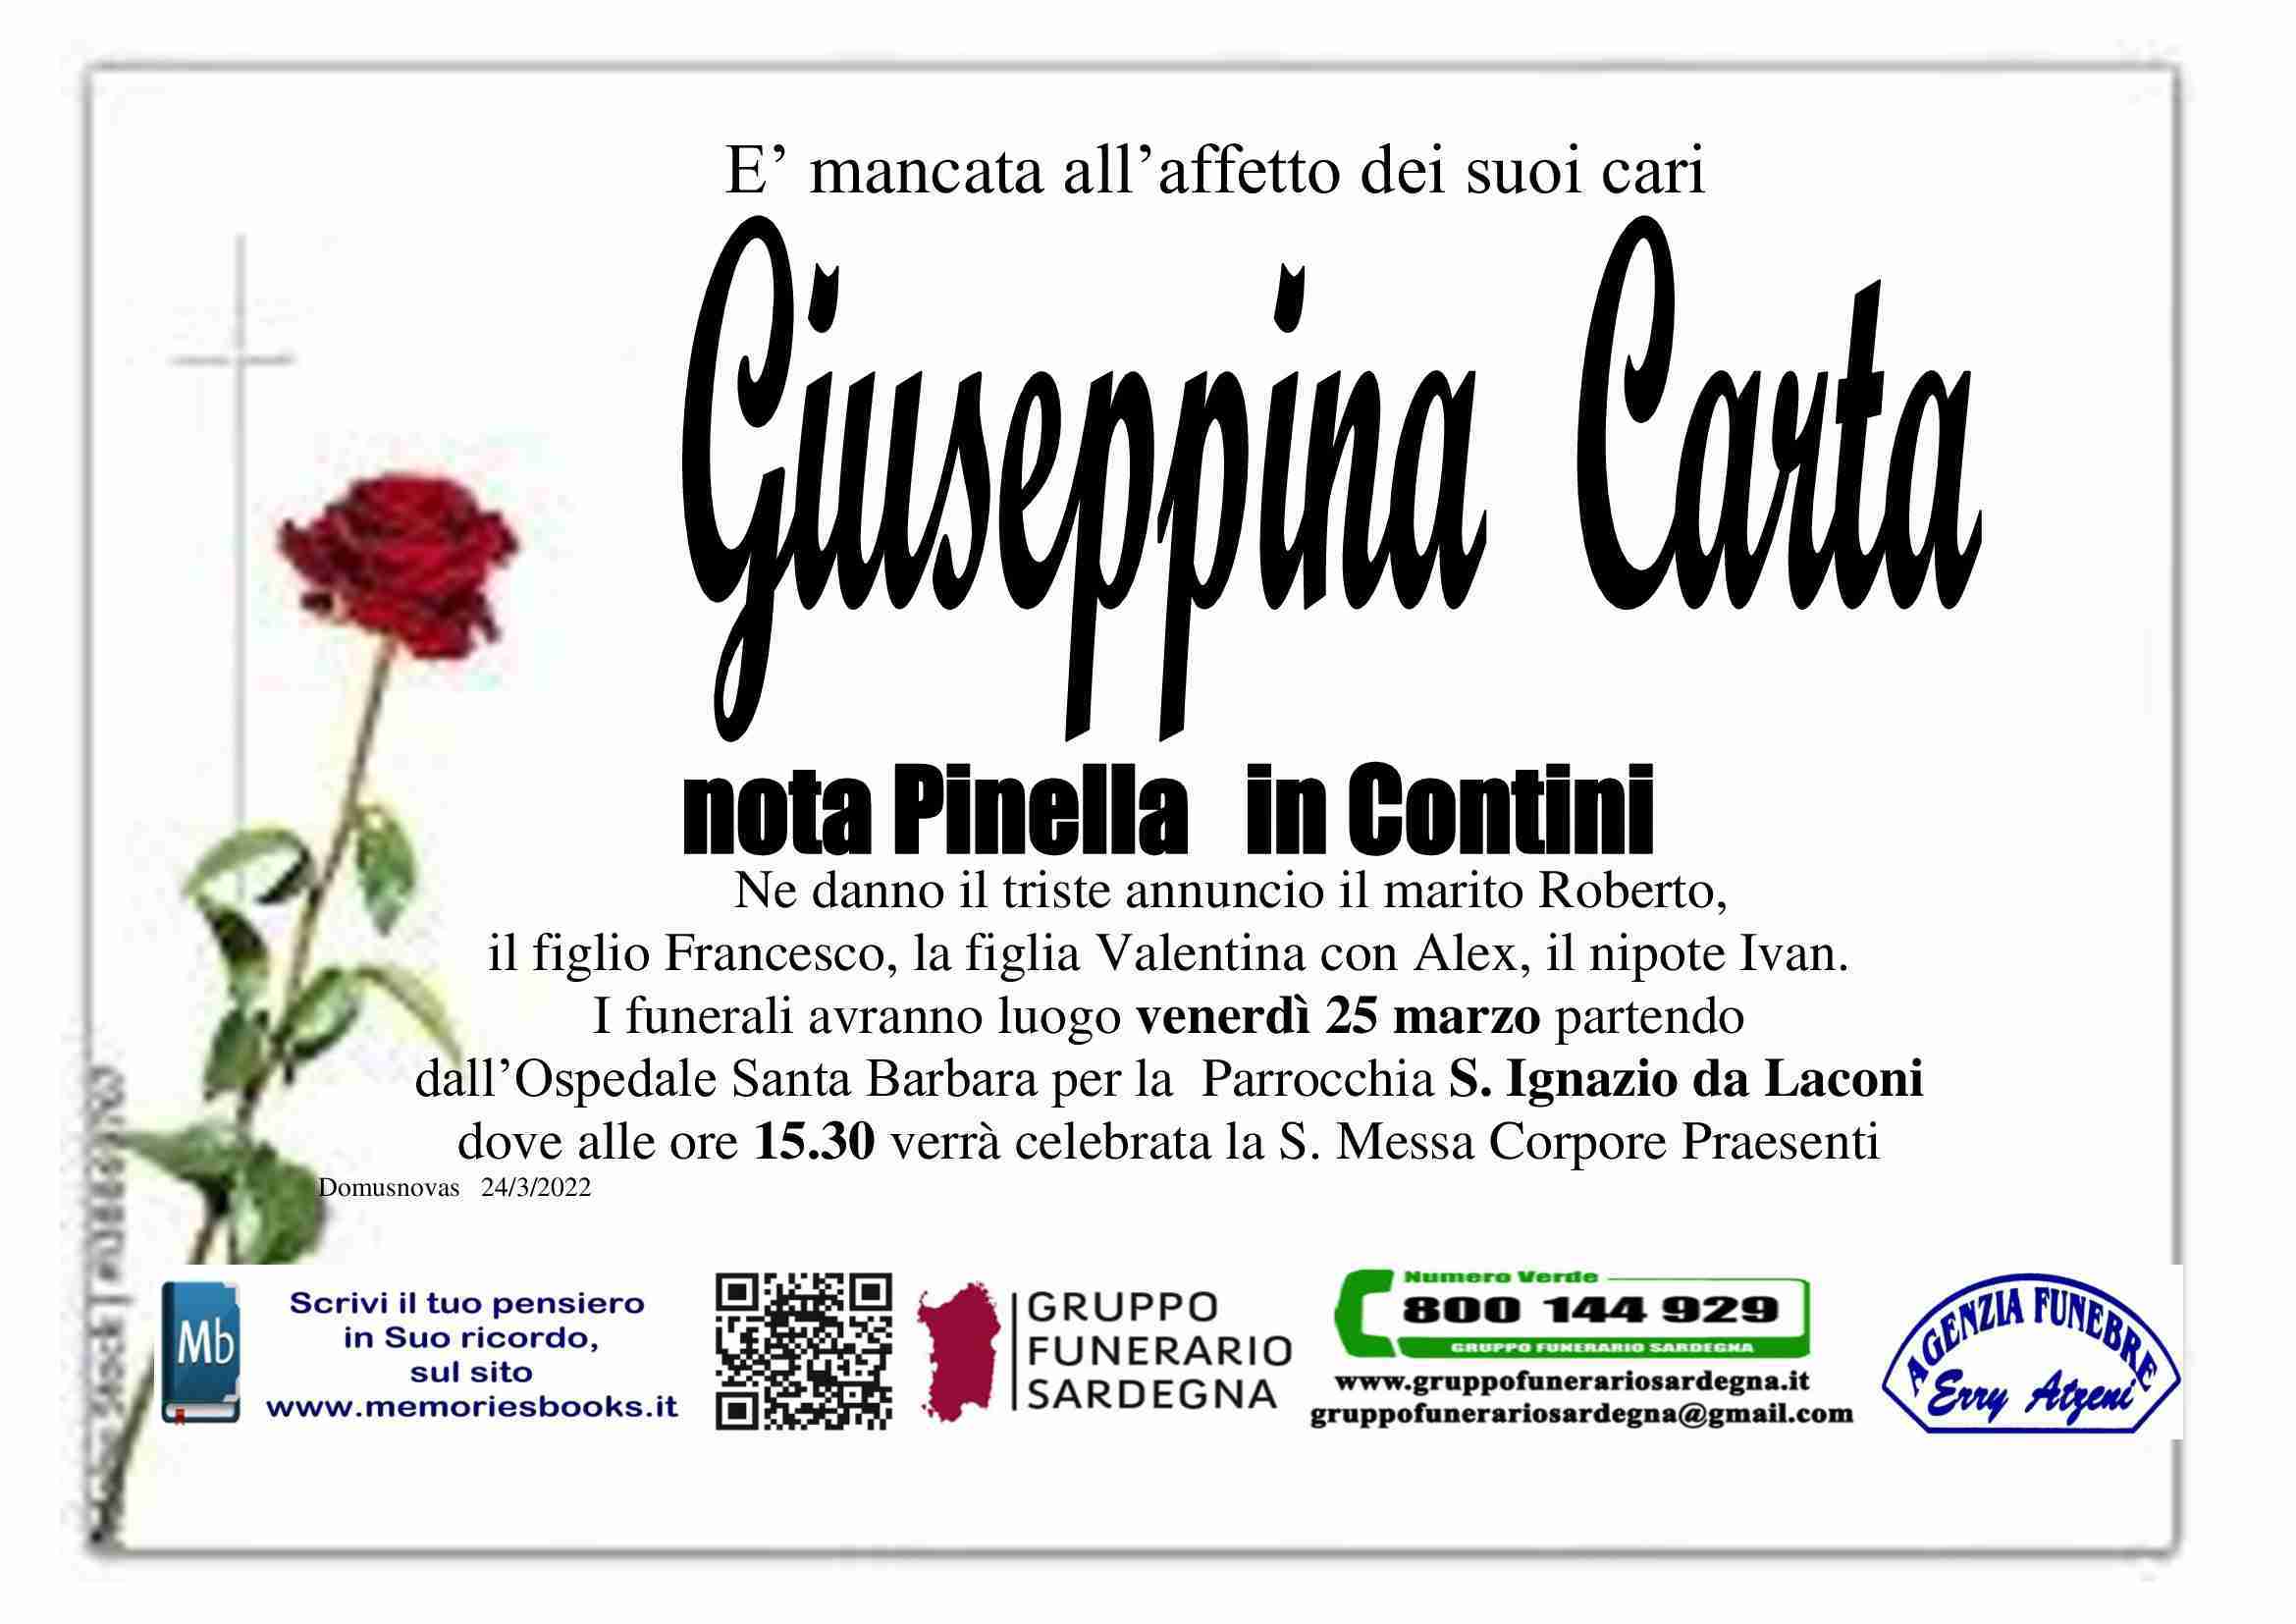 Giuseppina Carta